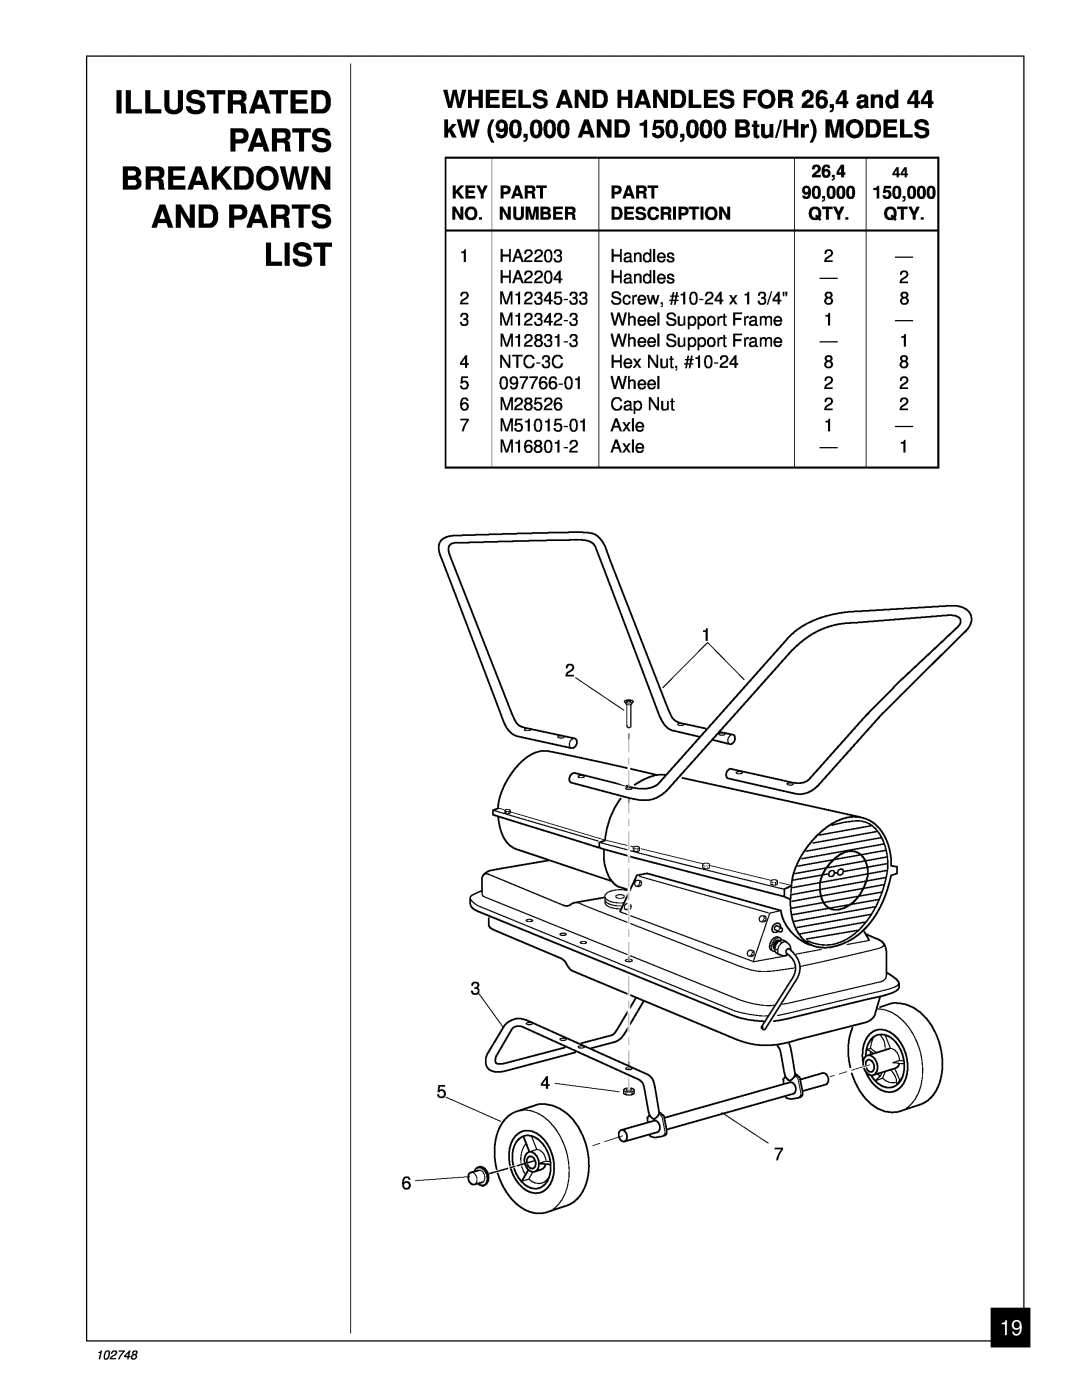 Desa 000) 26, 000) 20 owner manual Illustrated Parts Breakdown And Parts List, 26,4, 90,000, 150,000, Number, Description 